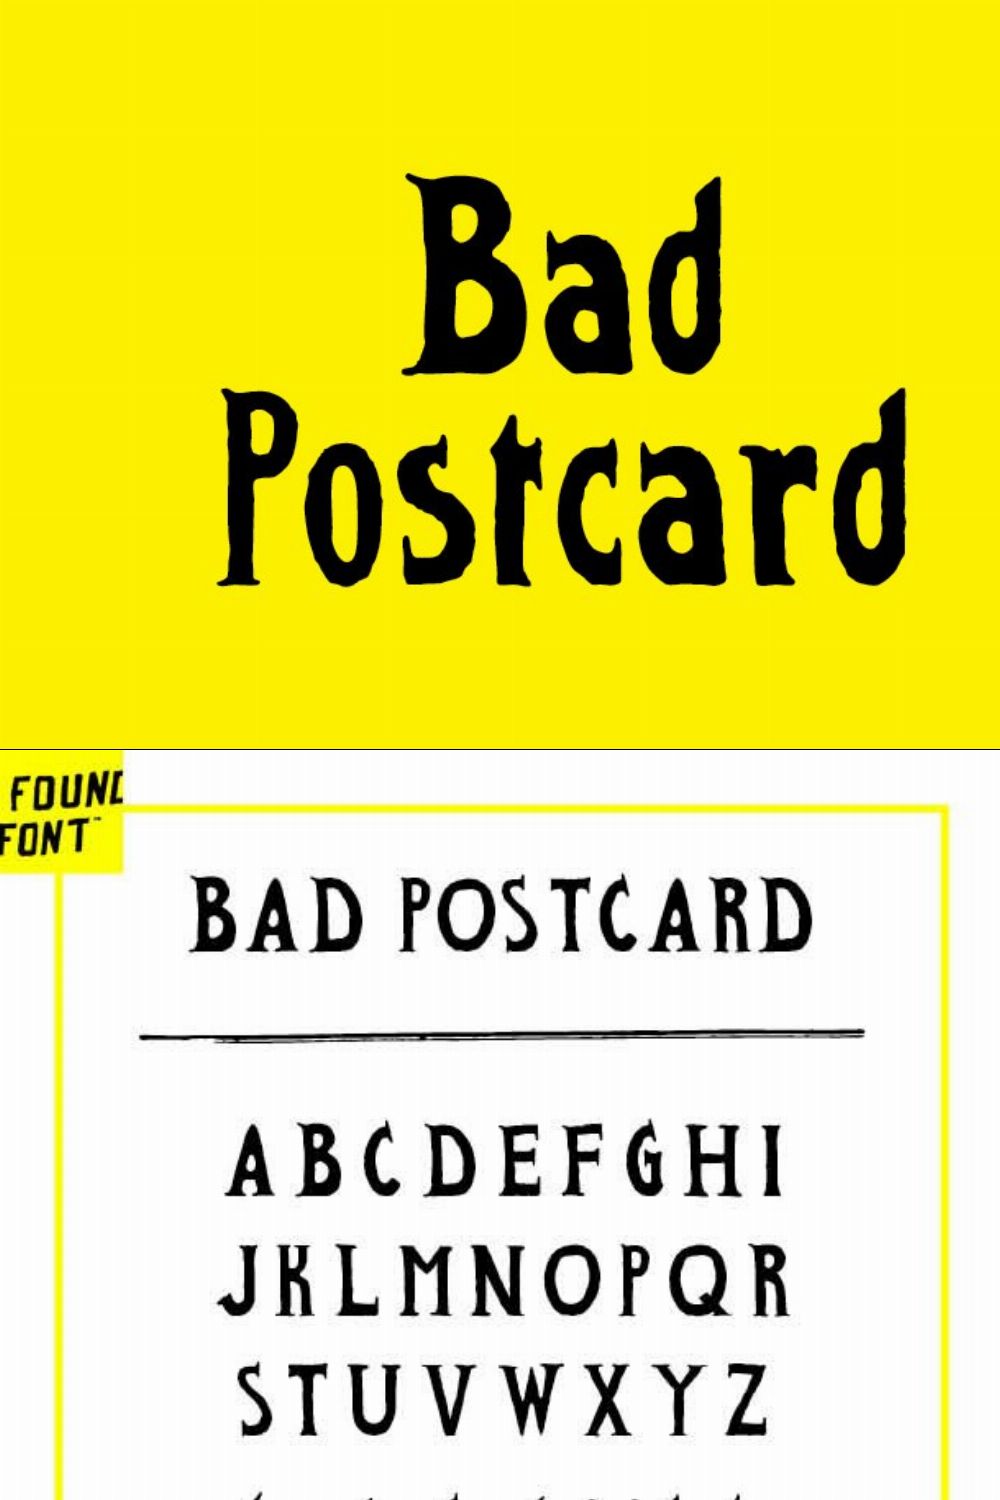 Bad Postcard pinterest preview image.